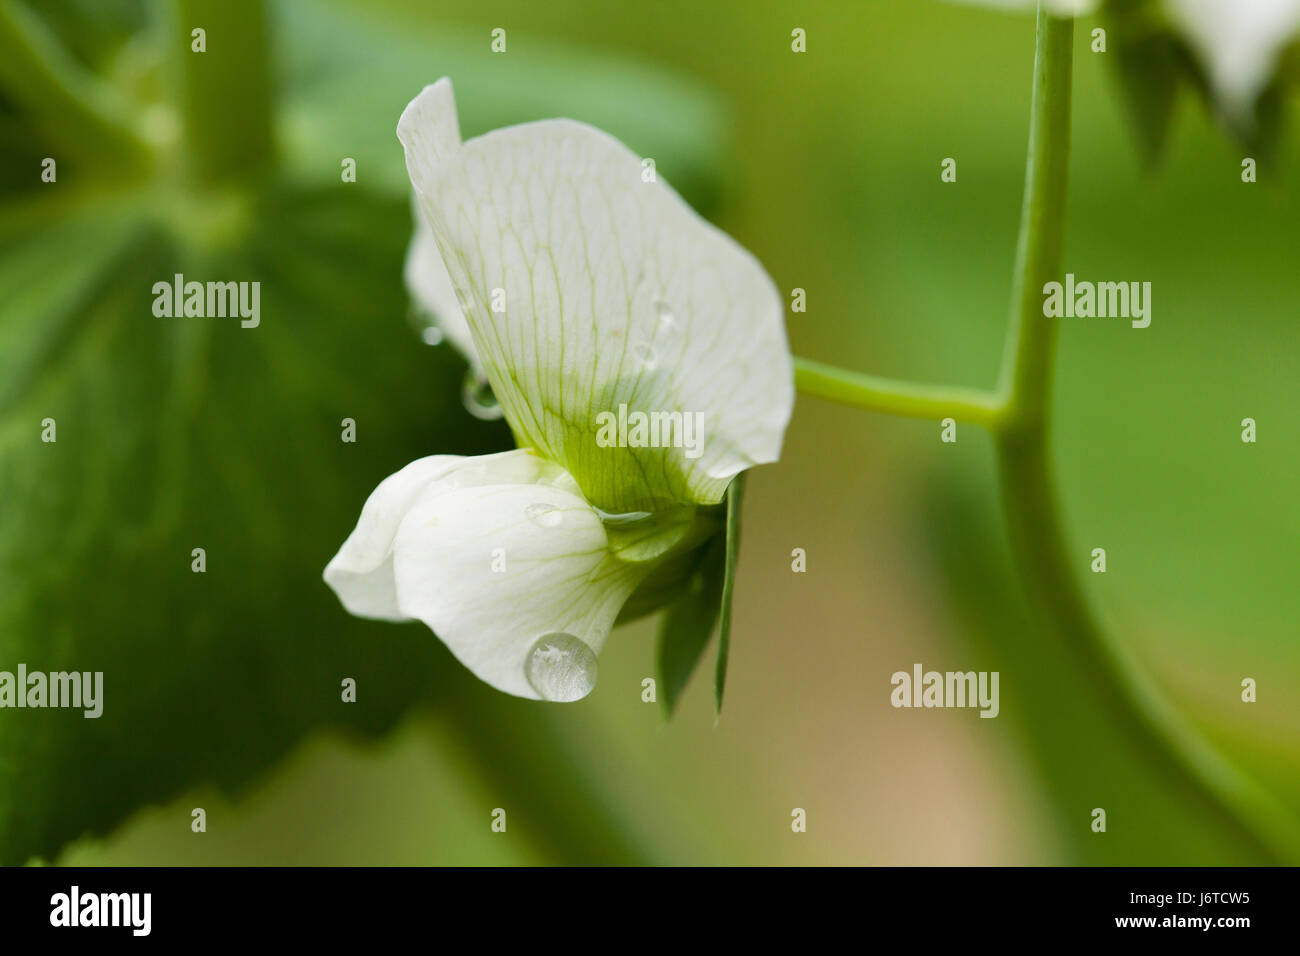 Snow pea flower (Pisum sativum var. saccharatum) Stock Photo